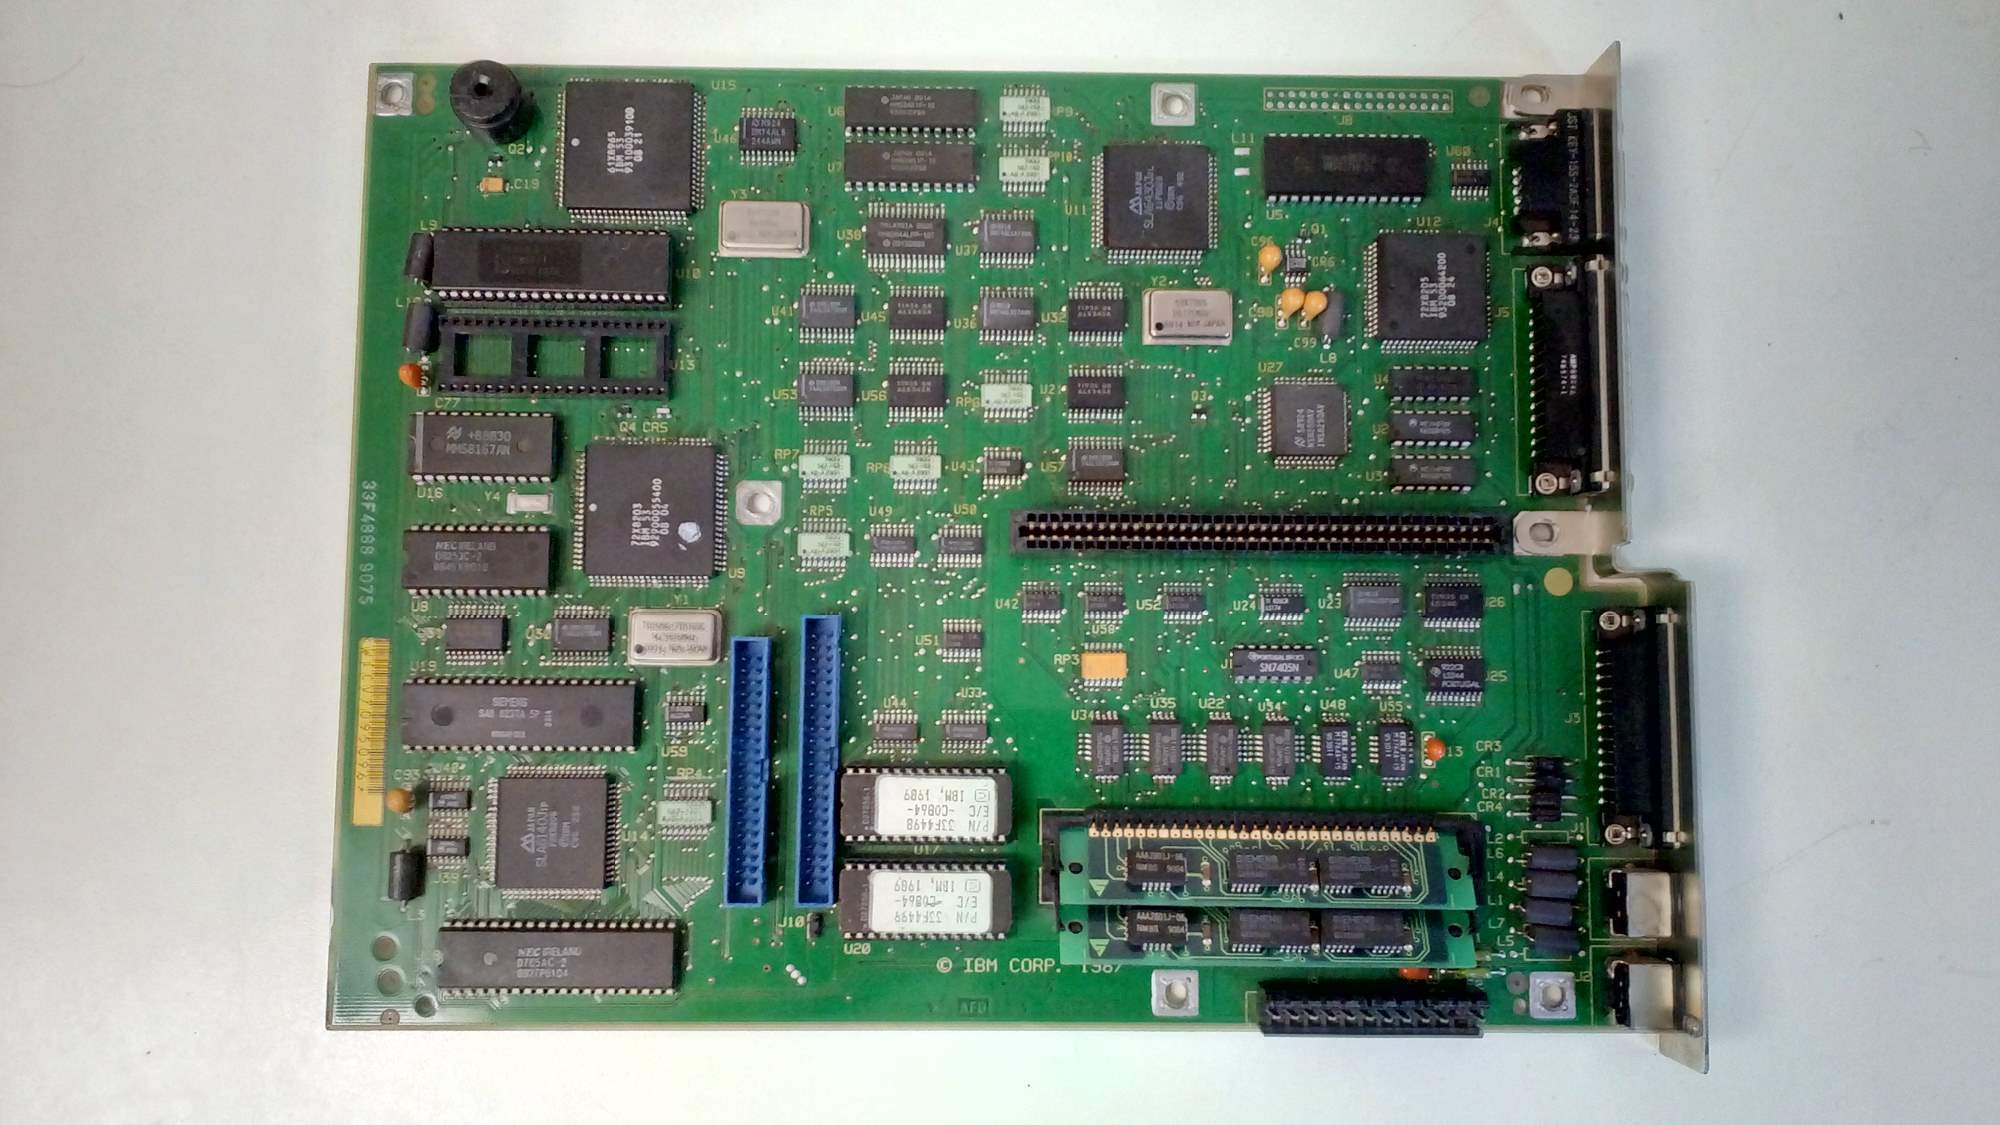 IBM PS/2 30-86